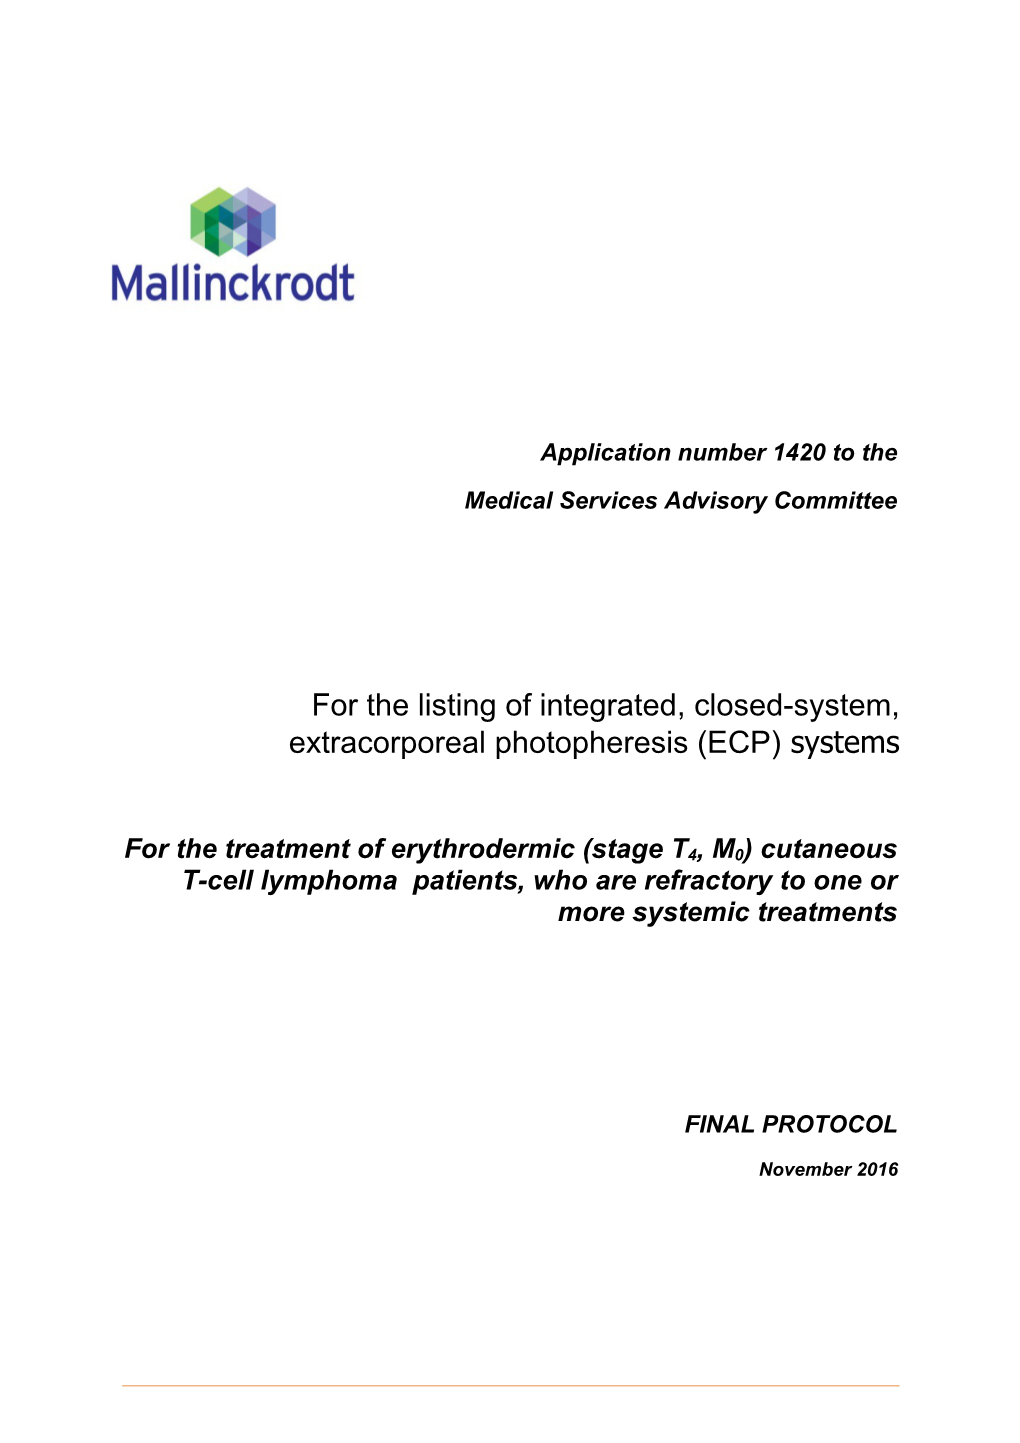 Mallinckrodt ECP for CTCL MSAC Protocol FINAL